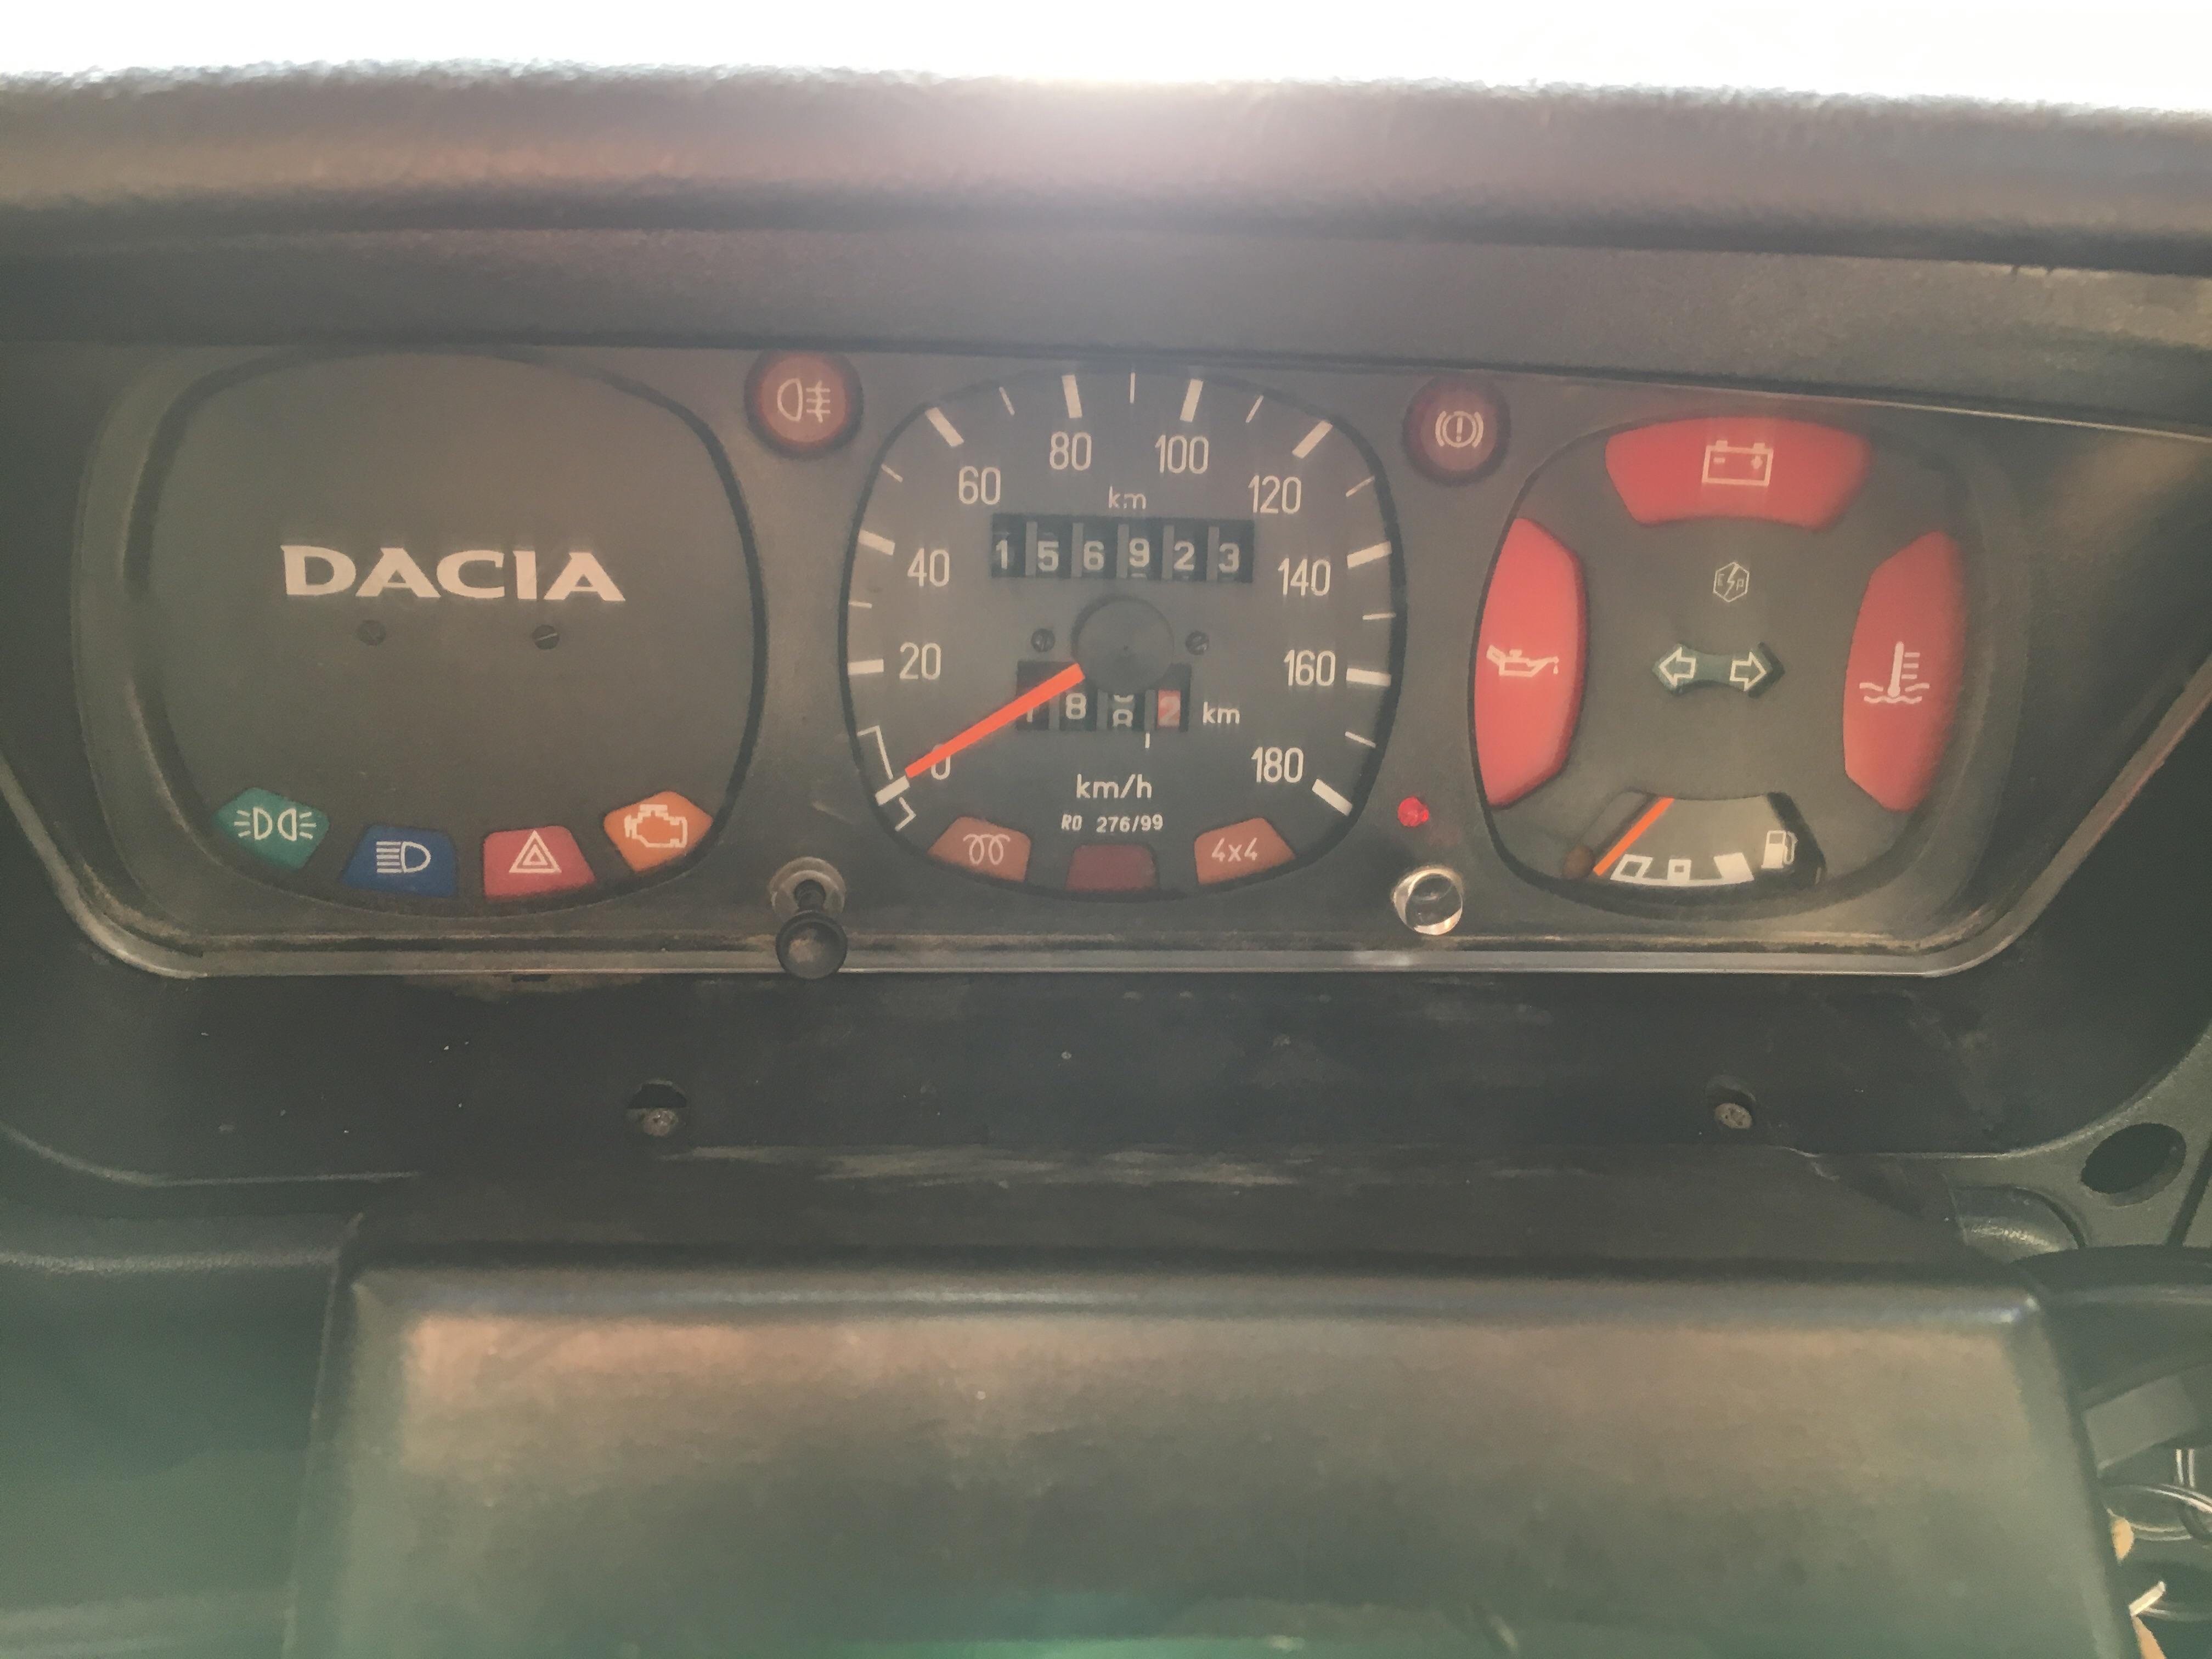 Buna ziua! Dețin o Dacia papuc 1.9 diesel si nu mi se mai aprinde nici o  lumina in bord, care este cauza? #113424 - 4Tuning Help